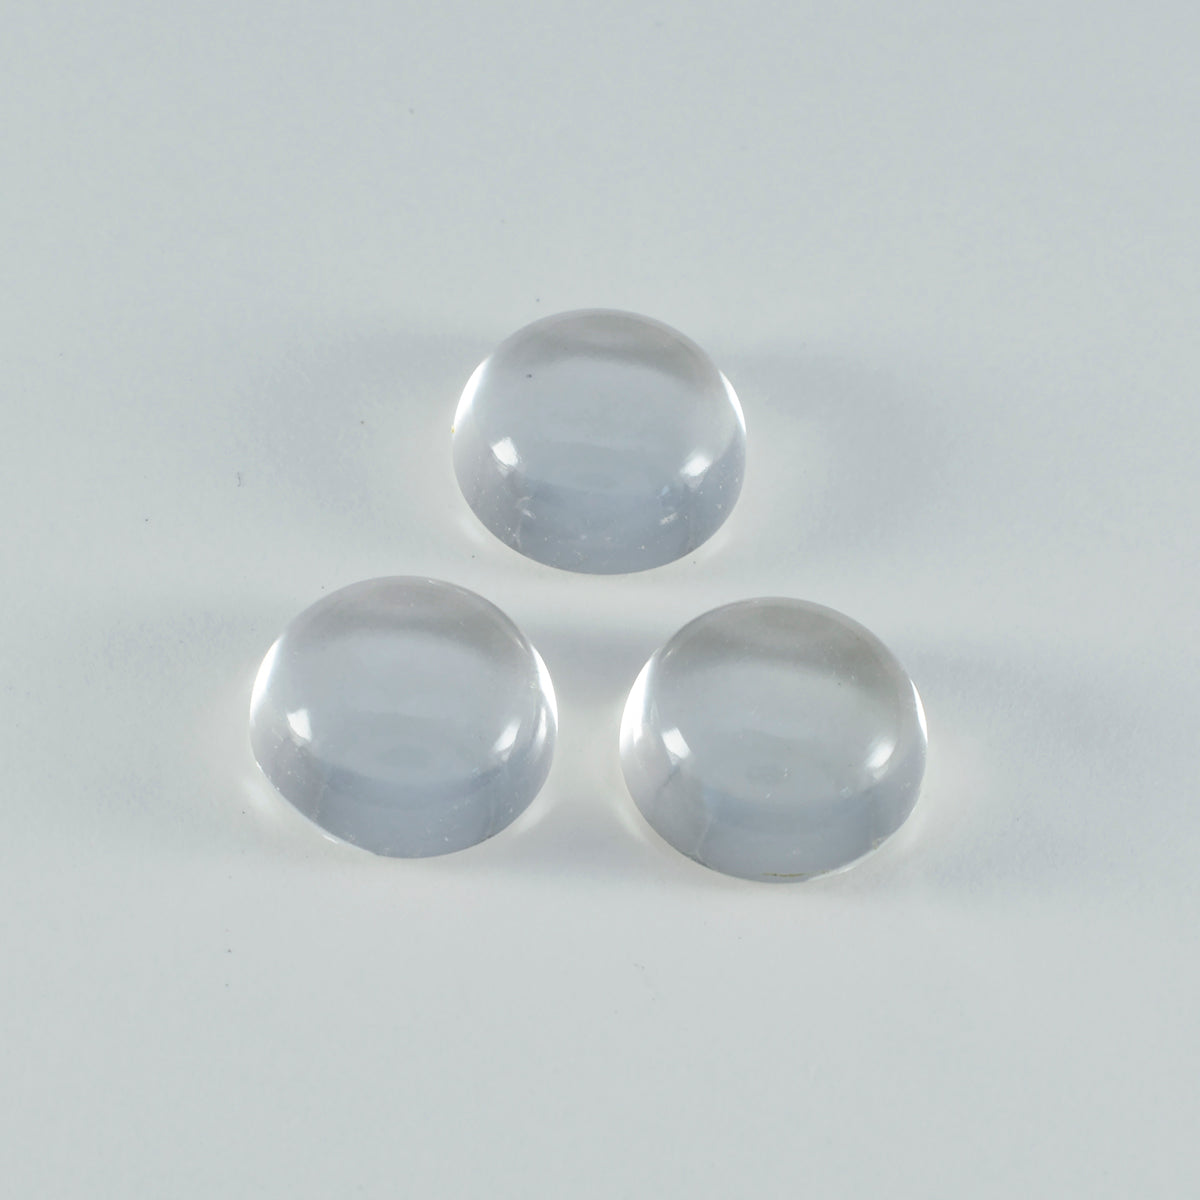 Riyogems 1PC White Crystal Quartz Cabochon 11x11 mm Round Shape beautiful Quality Loose Gem